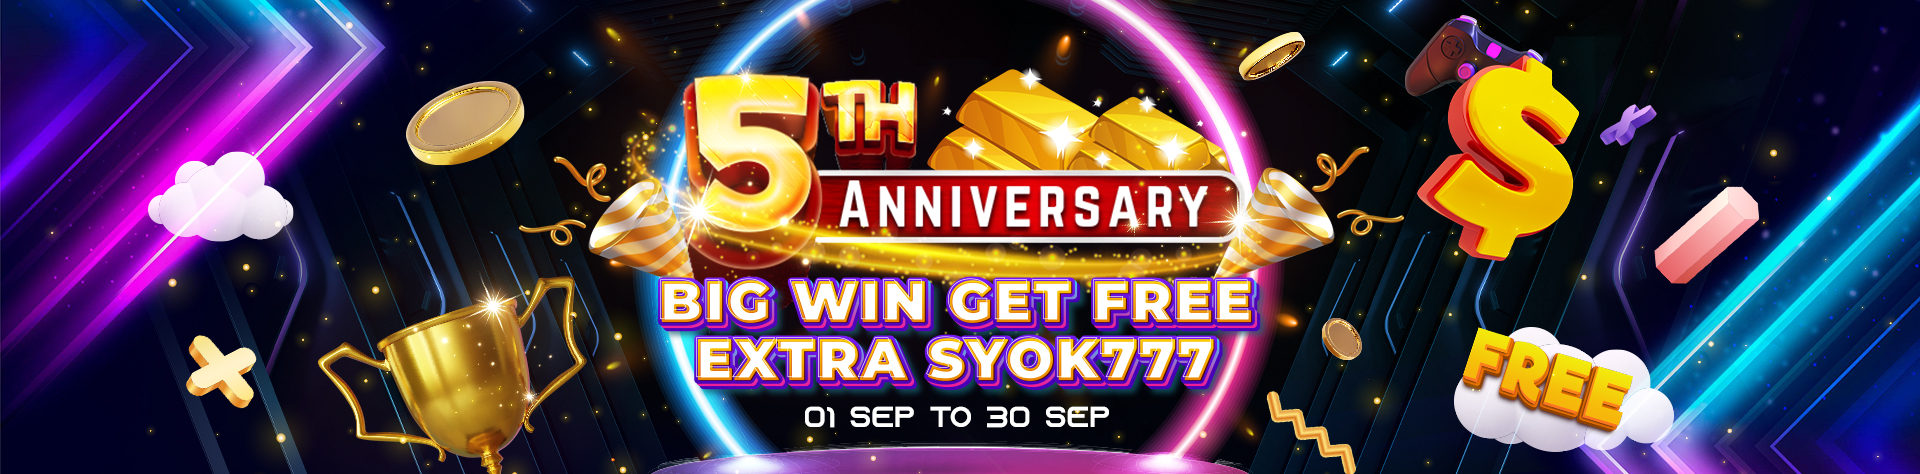 5th-Anniversary-Big-Win-Get-Free-Extra-Syok777.jpg